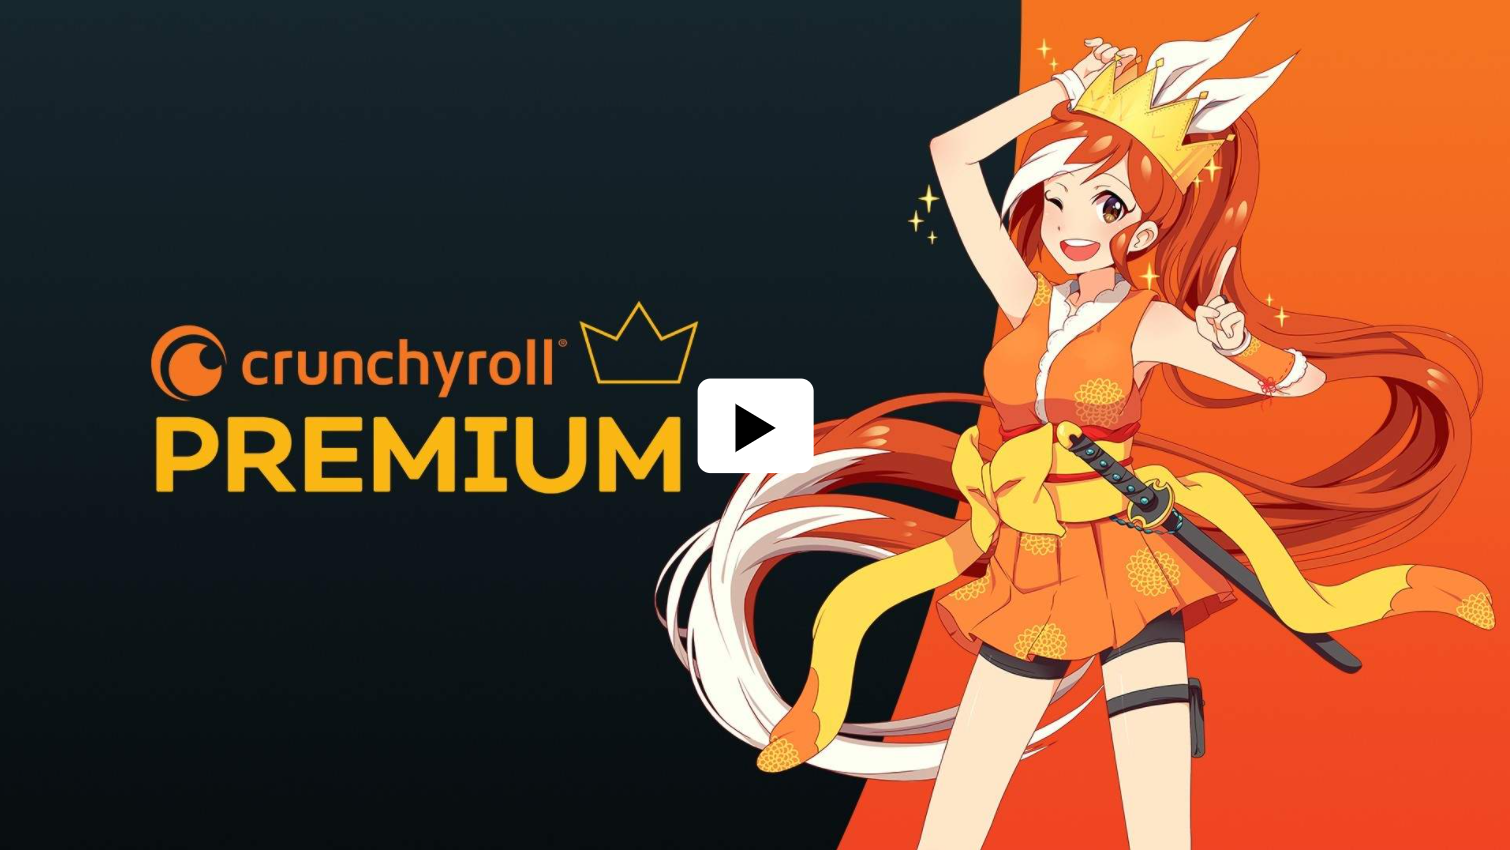 Video For Crunchyroll Premium llega a Recompensas de Xbox Game Pass Ultimate